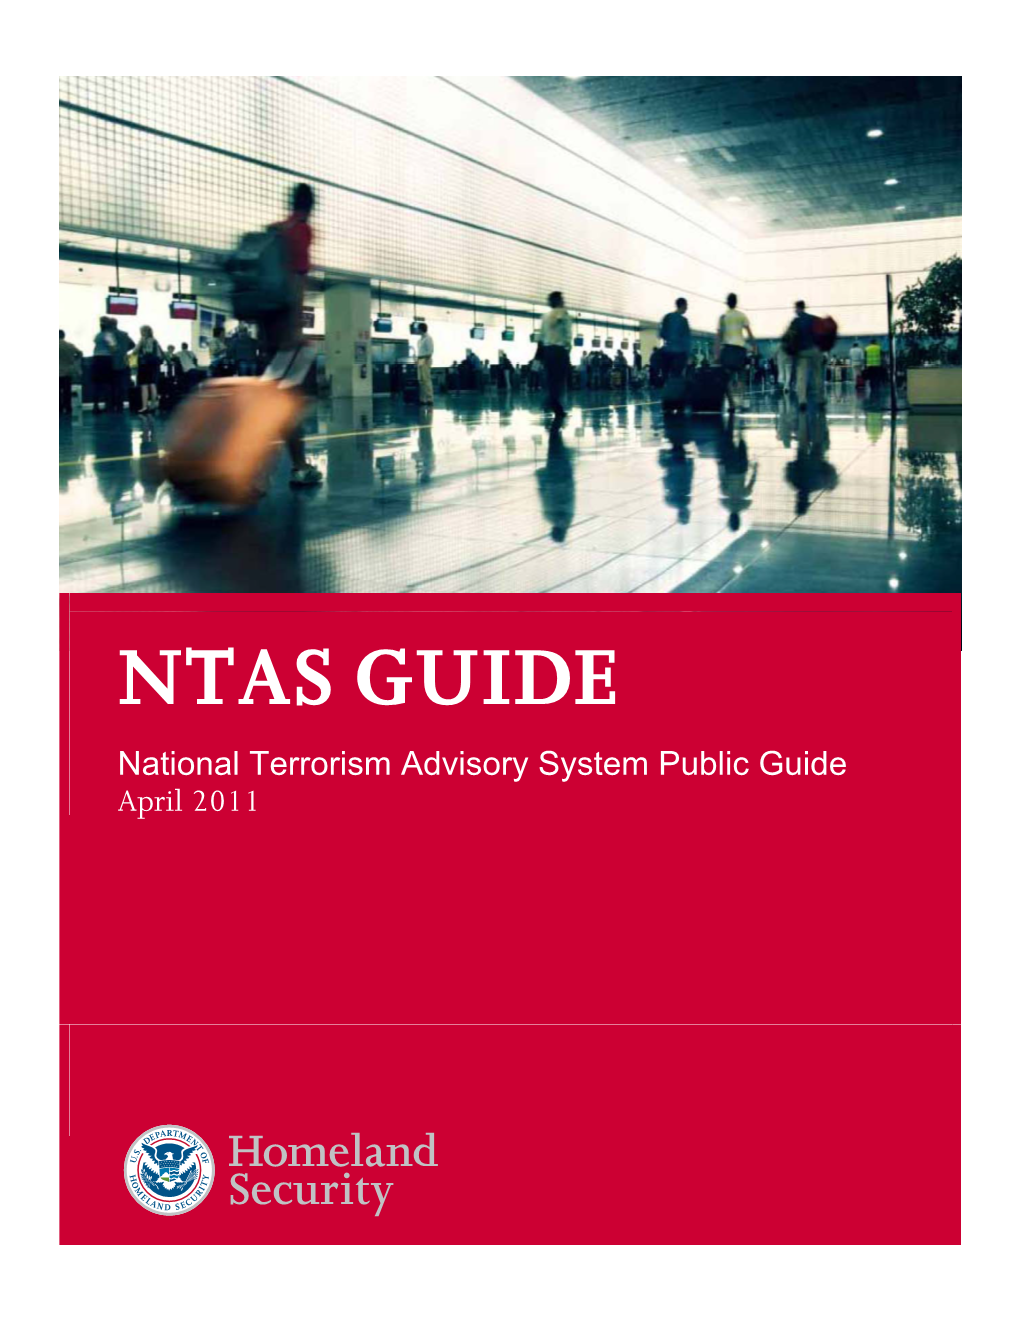 National Terrorism Advisory System (NTAS) Public Guide, April 2011